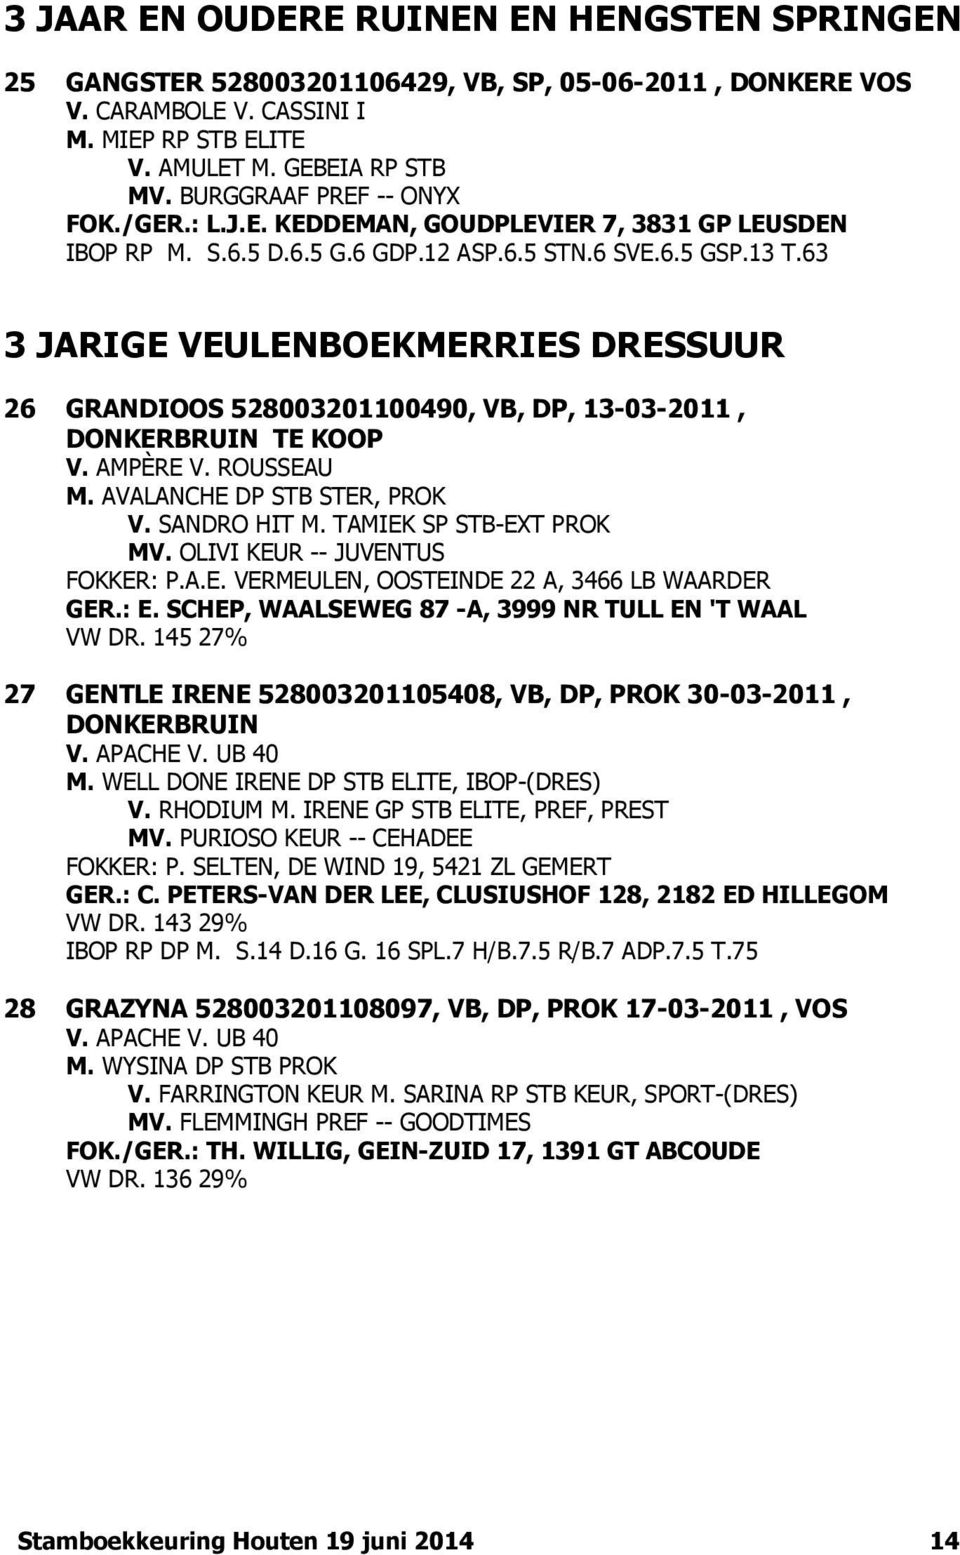 63 3 JARIGE VEULENBOEKMERRIES DRESSUUR 26 GRANDIOOS 528003201100490, VB, DP, 13-03-2011, DONKERBRUIN TE KOOP V. AMPÈRE V. ROUSSEAU M. AVALANCHE DP STB STER, PROK V. SANDRO HIT M.